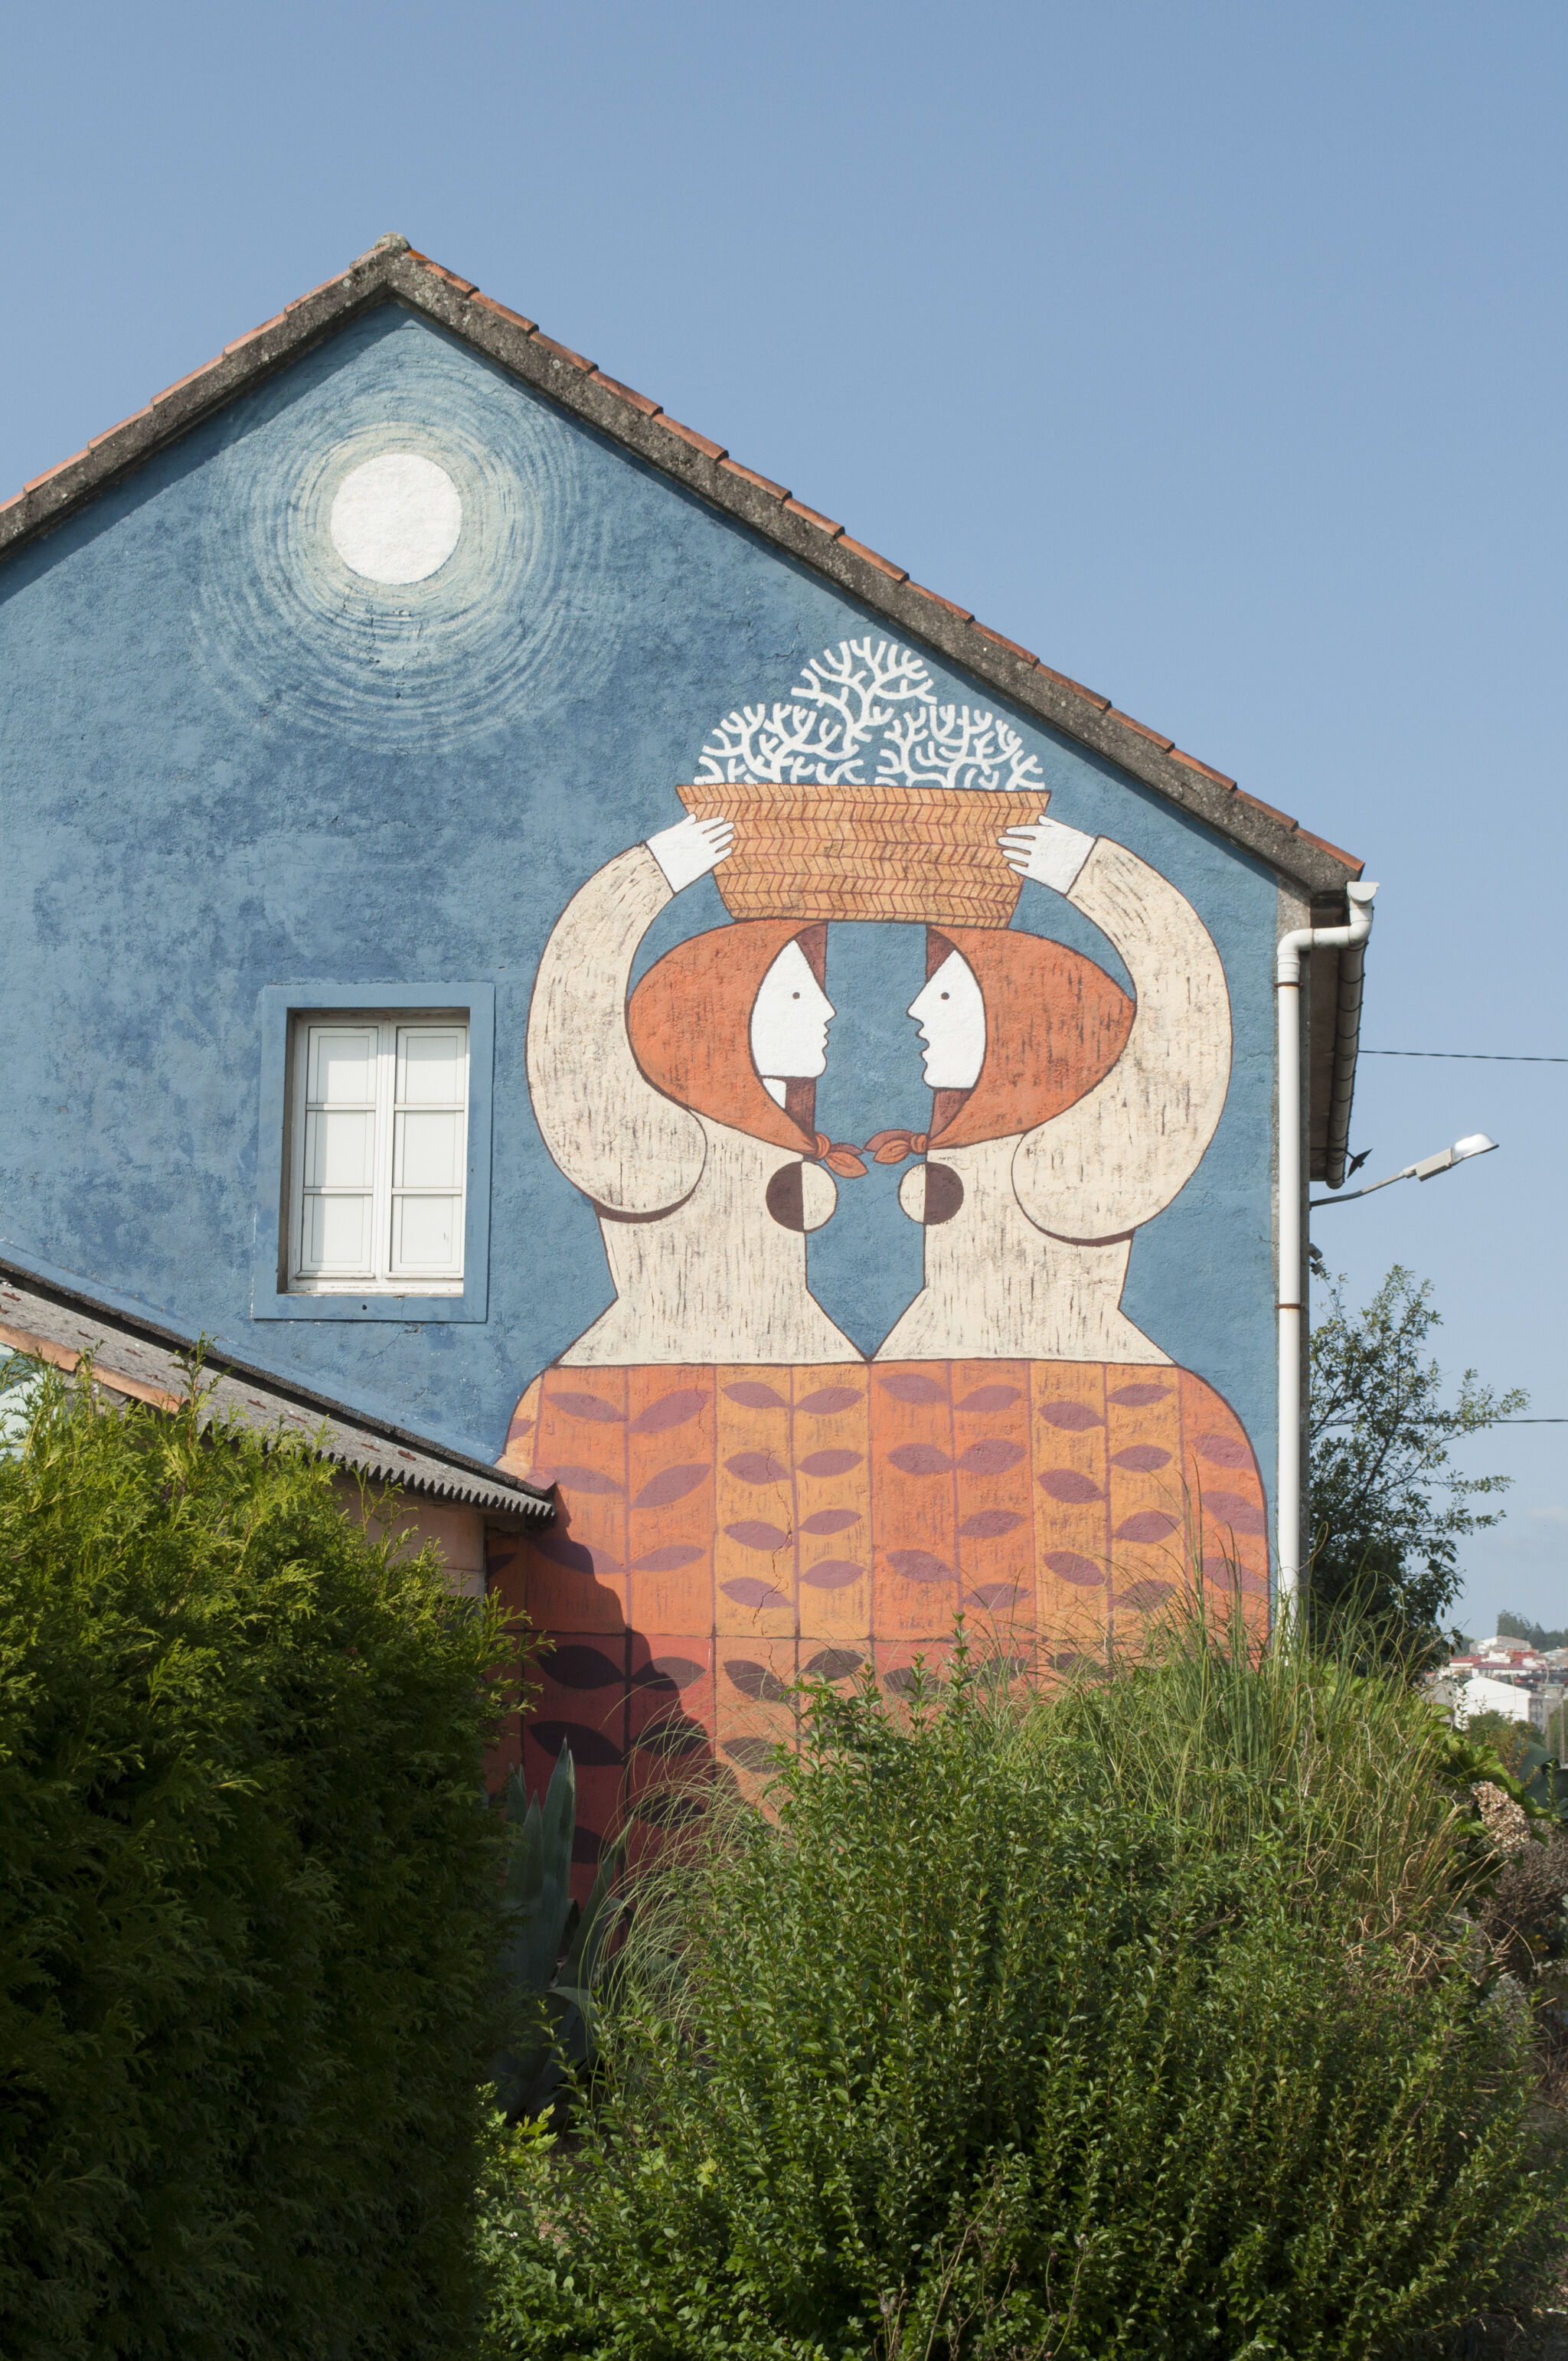 Xoana Almar&mdash;Wall by XOANA ALMAR for DESORDES CREATIVAS 2017 in Ordes (Galicia - Spain)